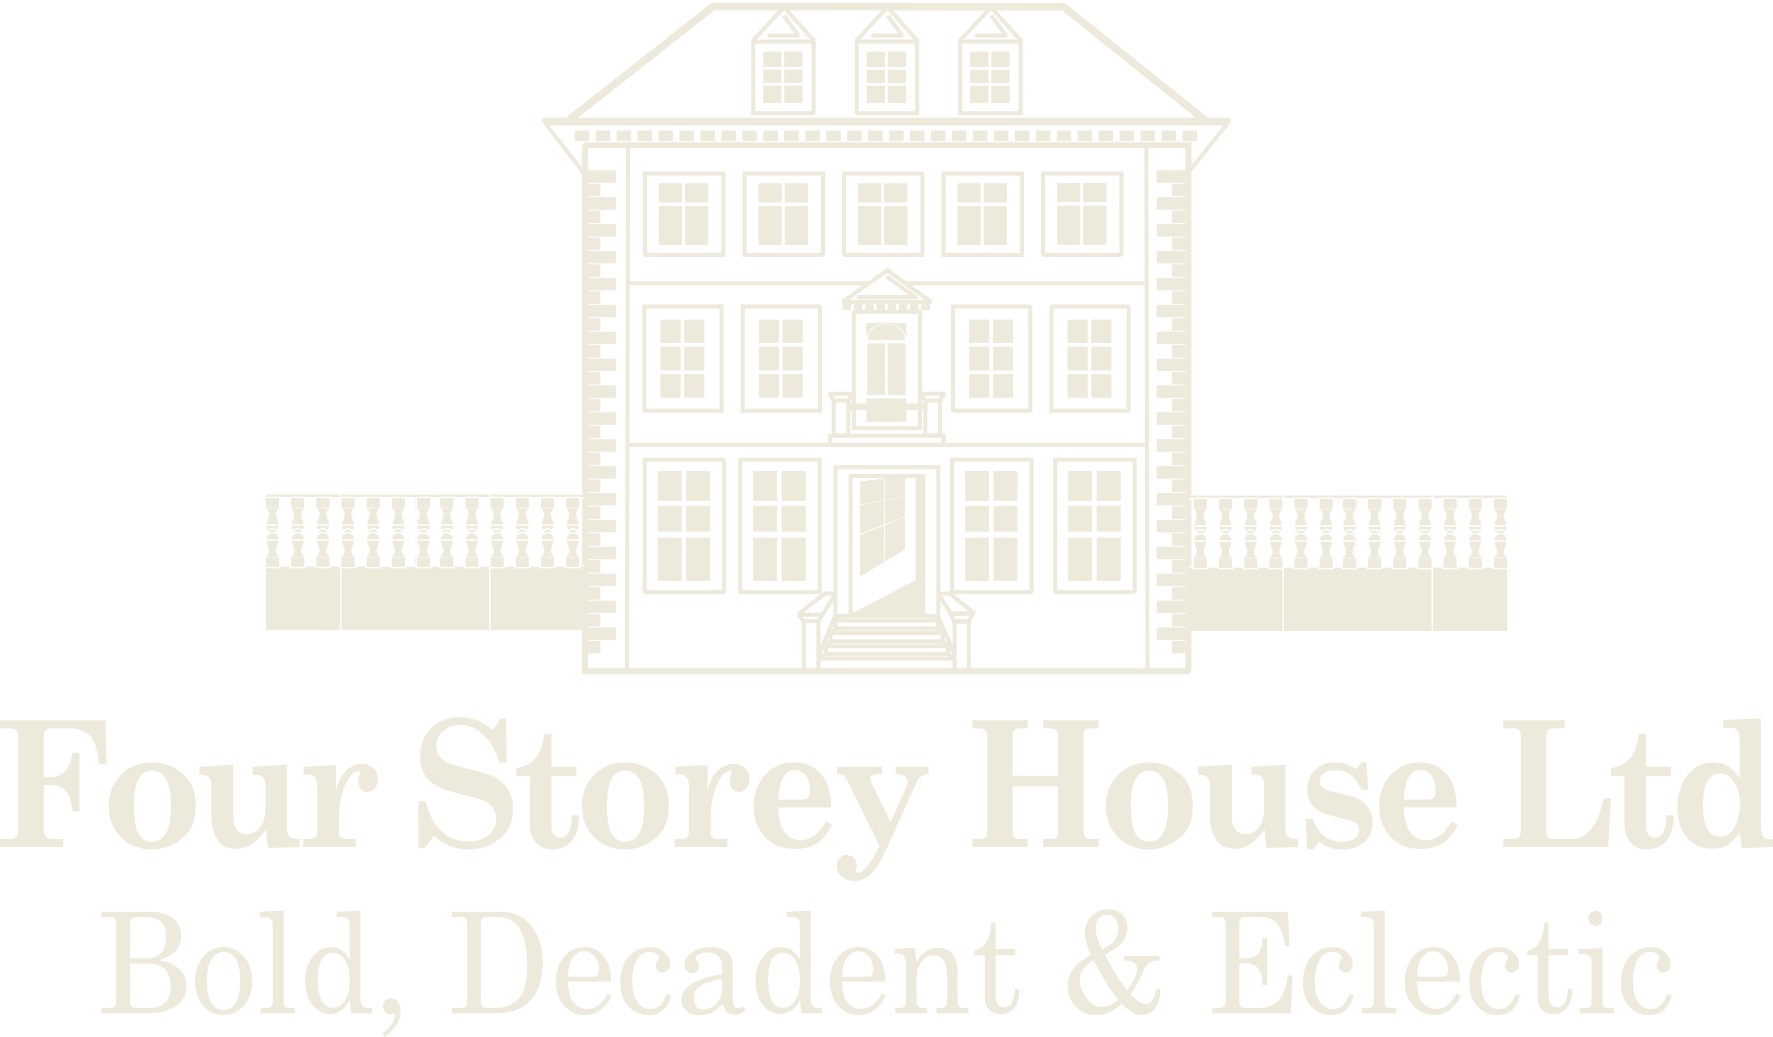 Four Storey House Ltd